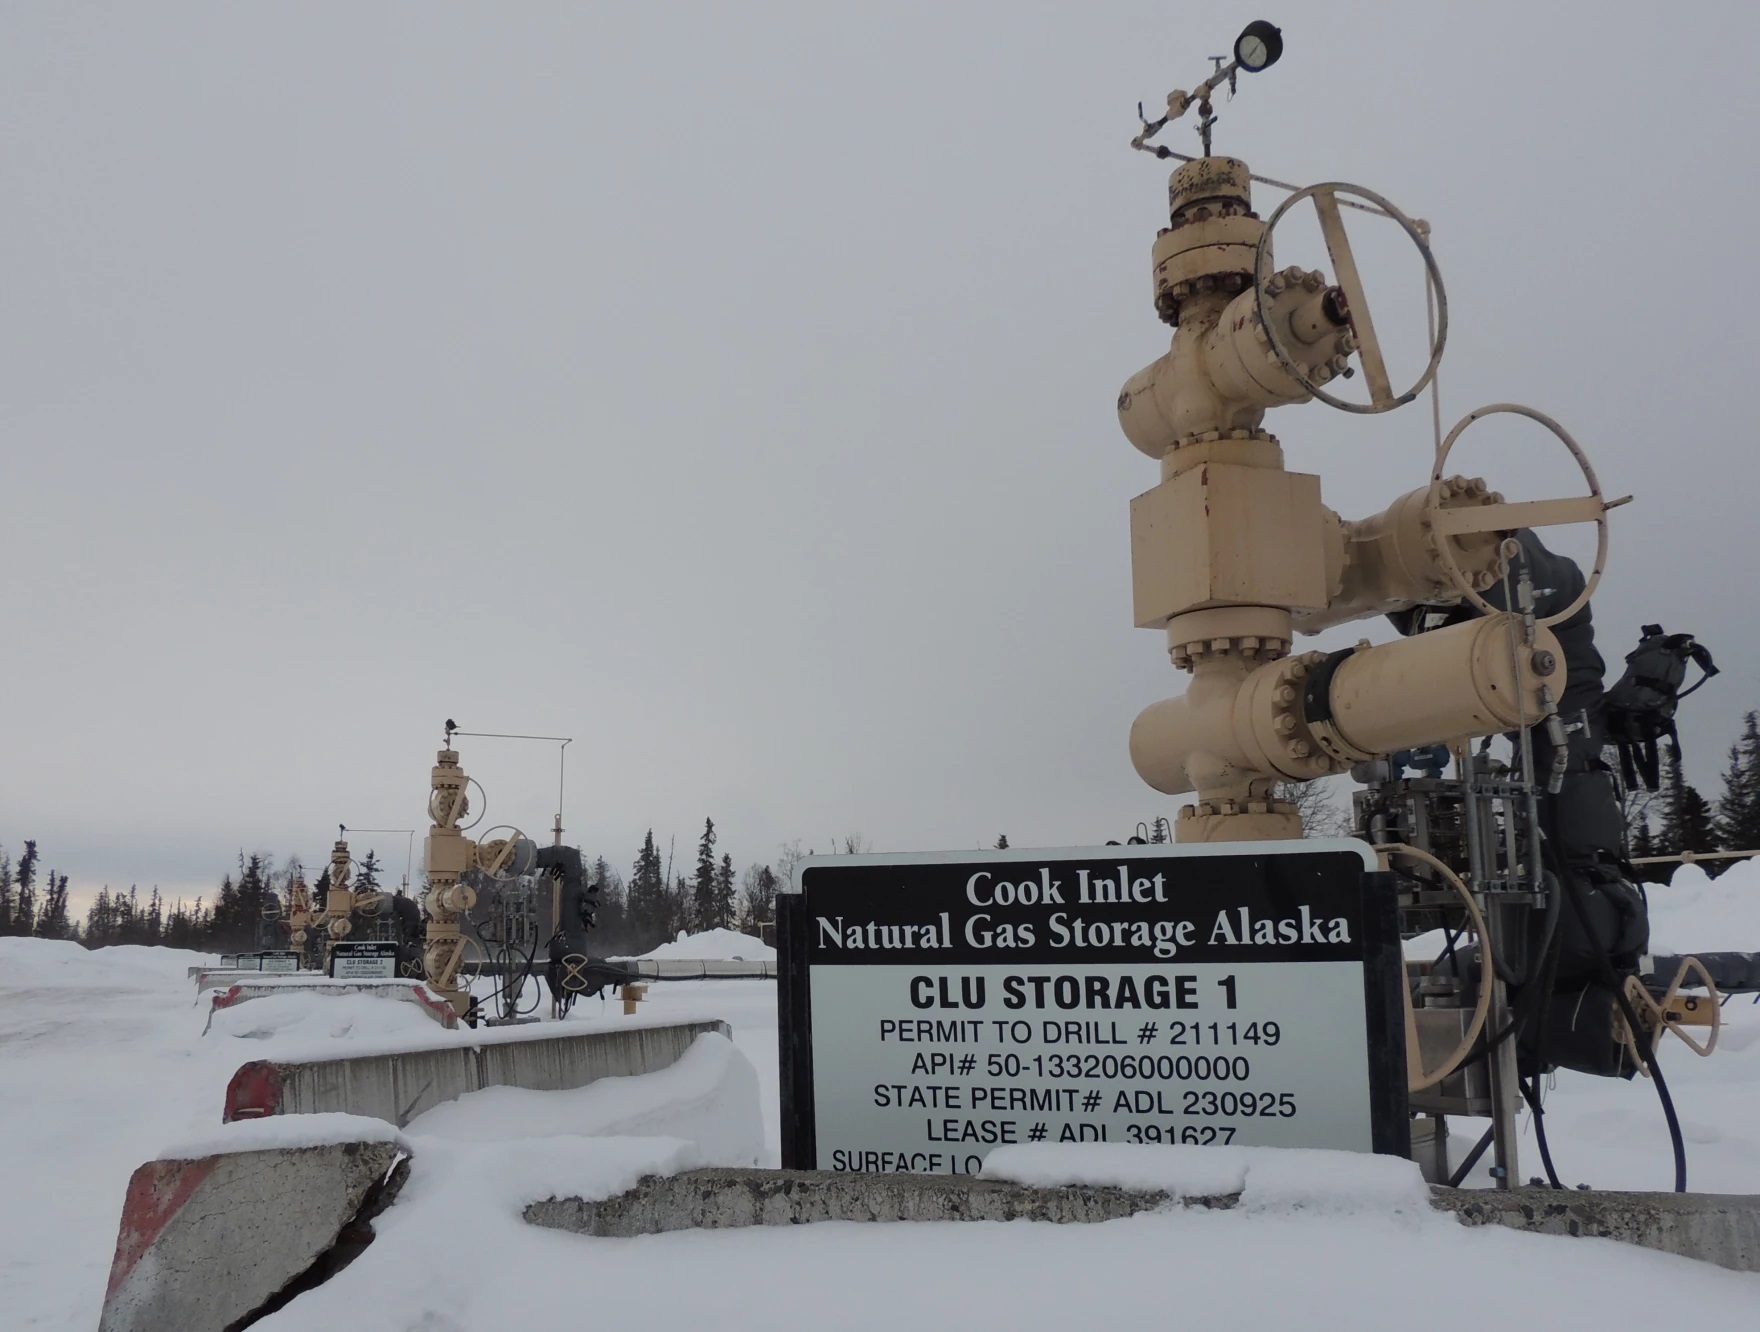 The Cook Inlet Natural Gas Storage Alaska facility